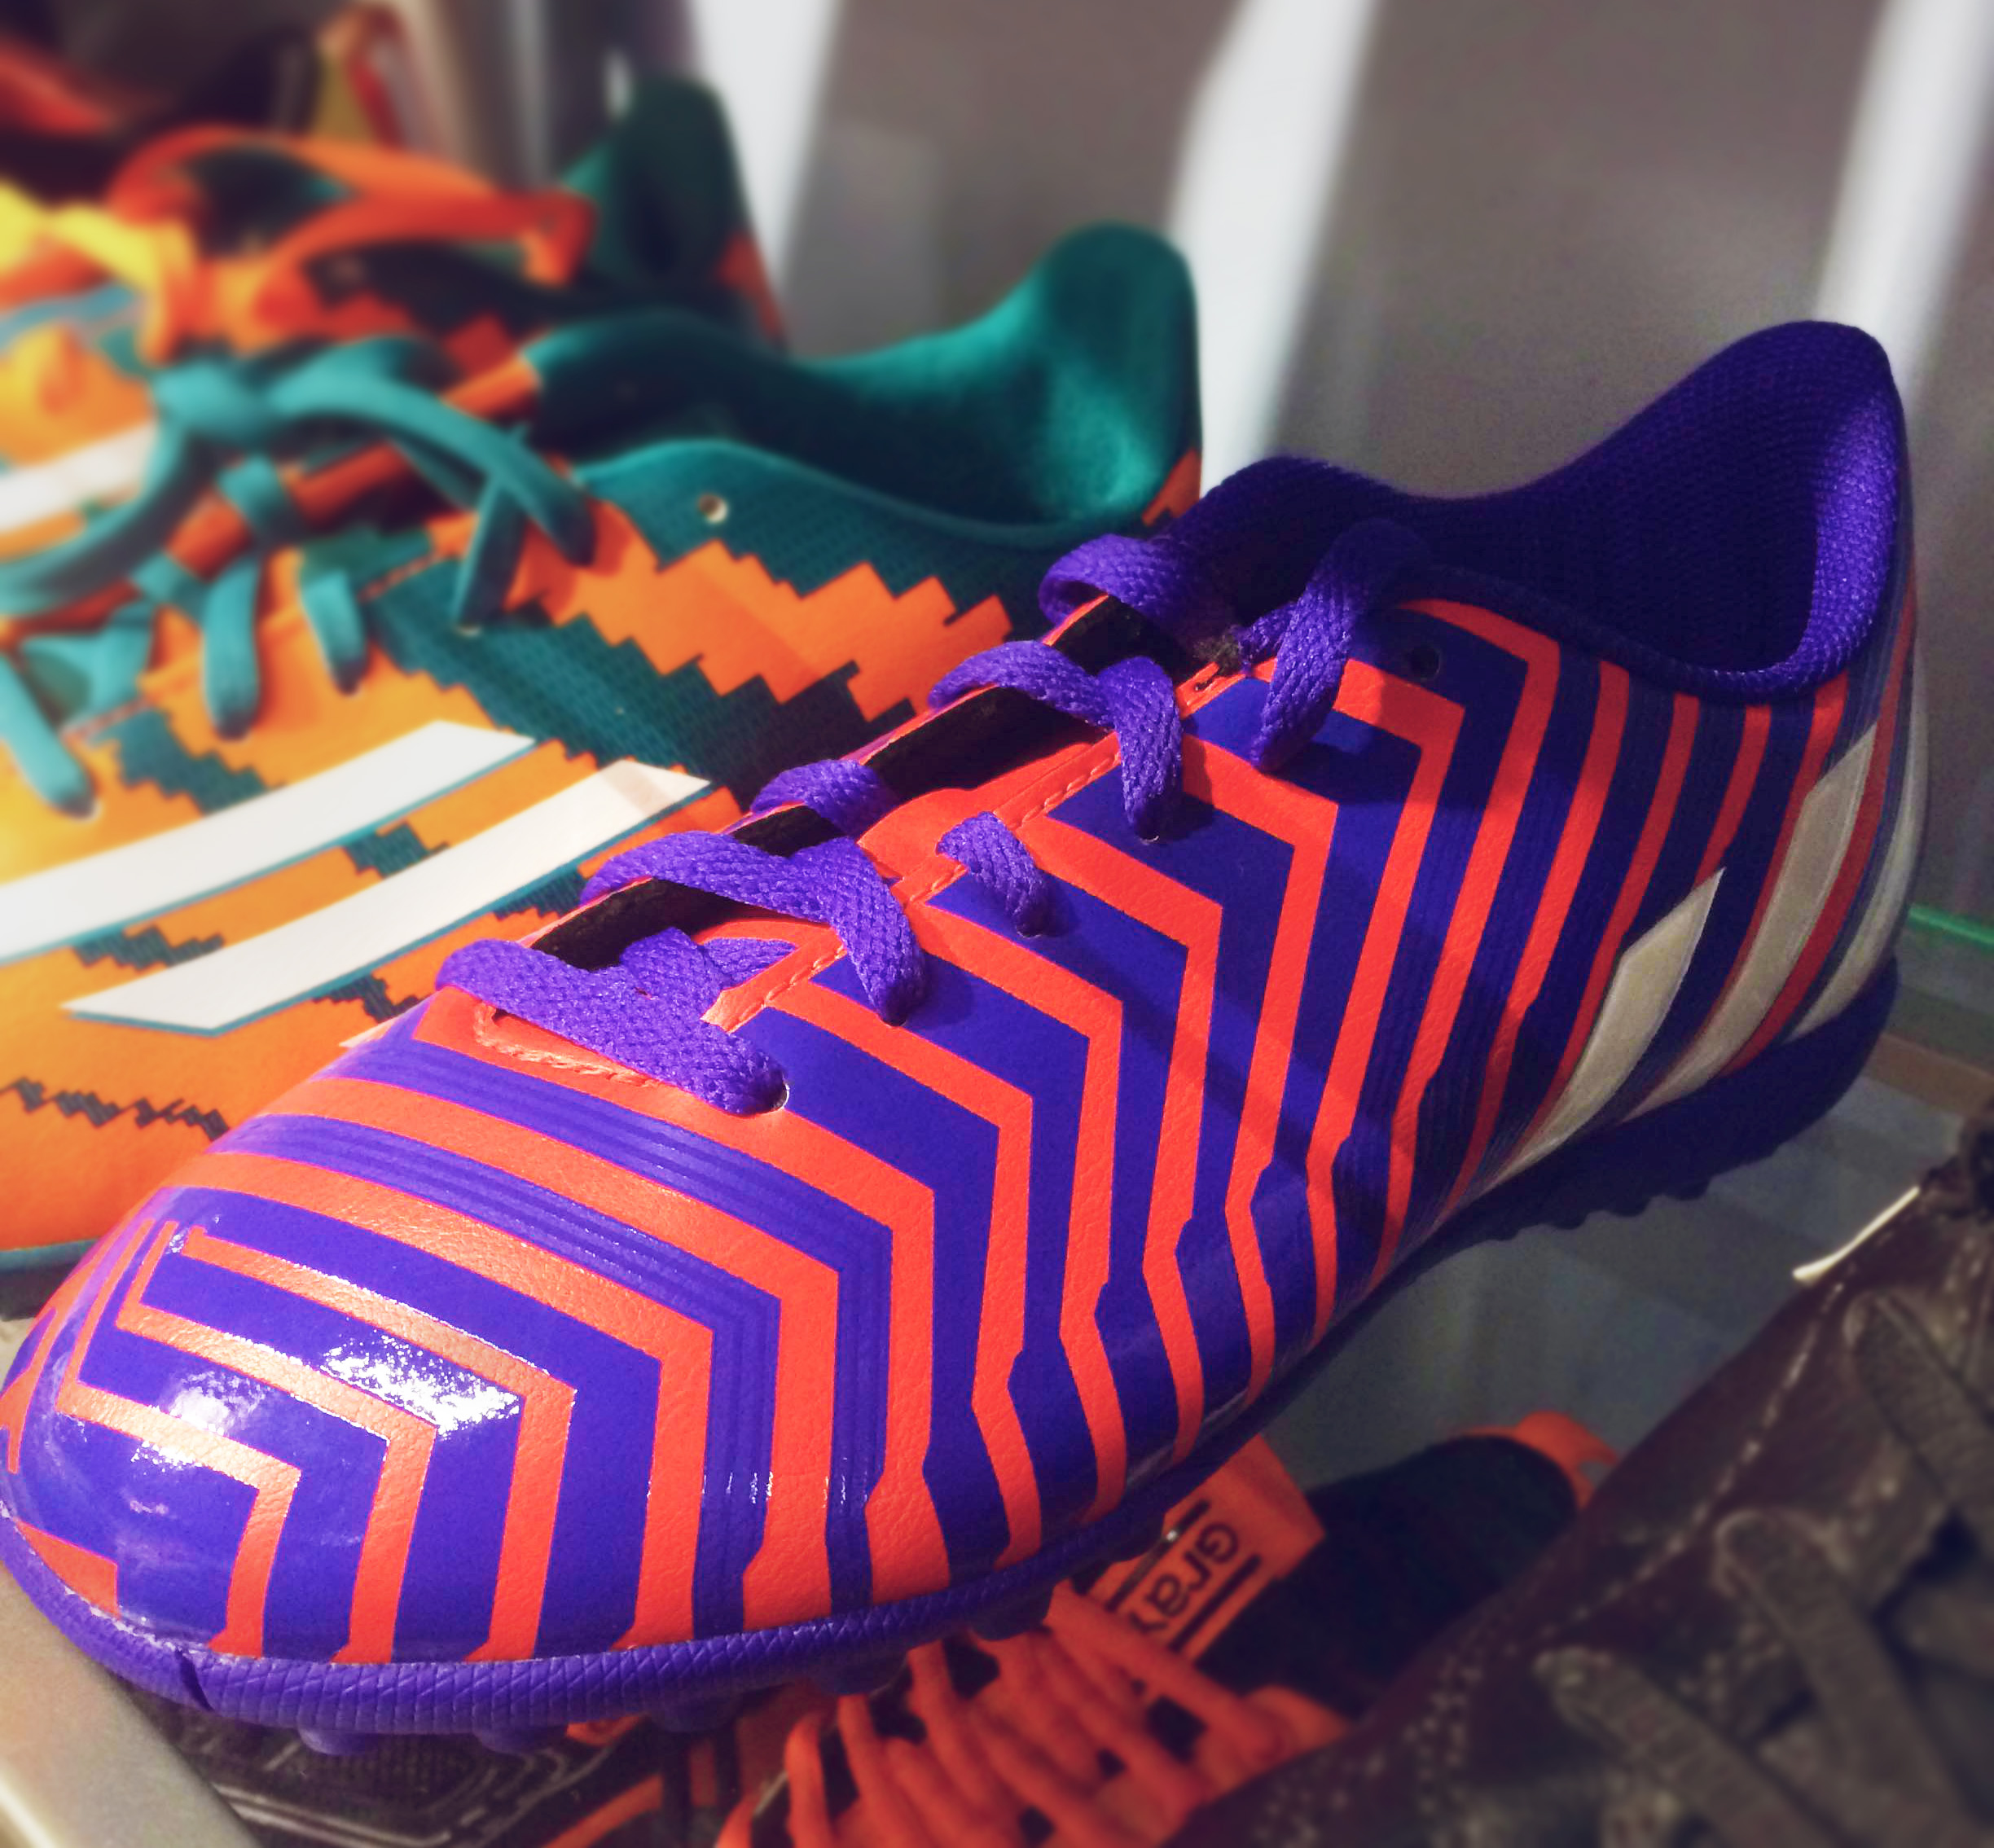 New in: Adidas Predito FxG J Mixed Surface Football Boots